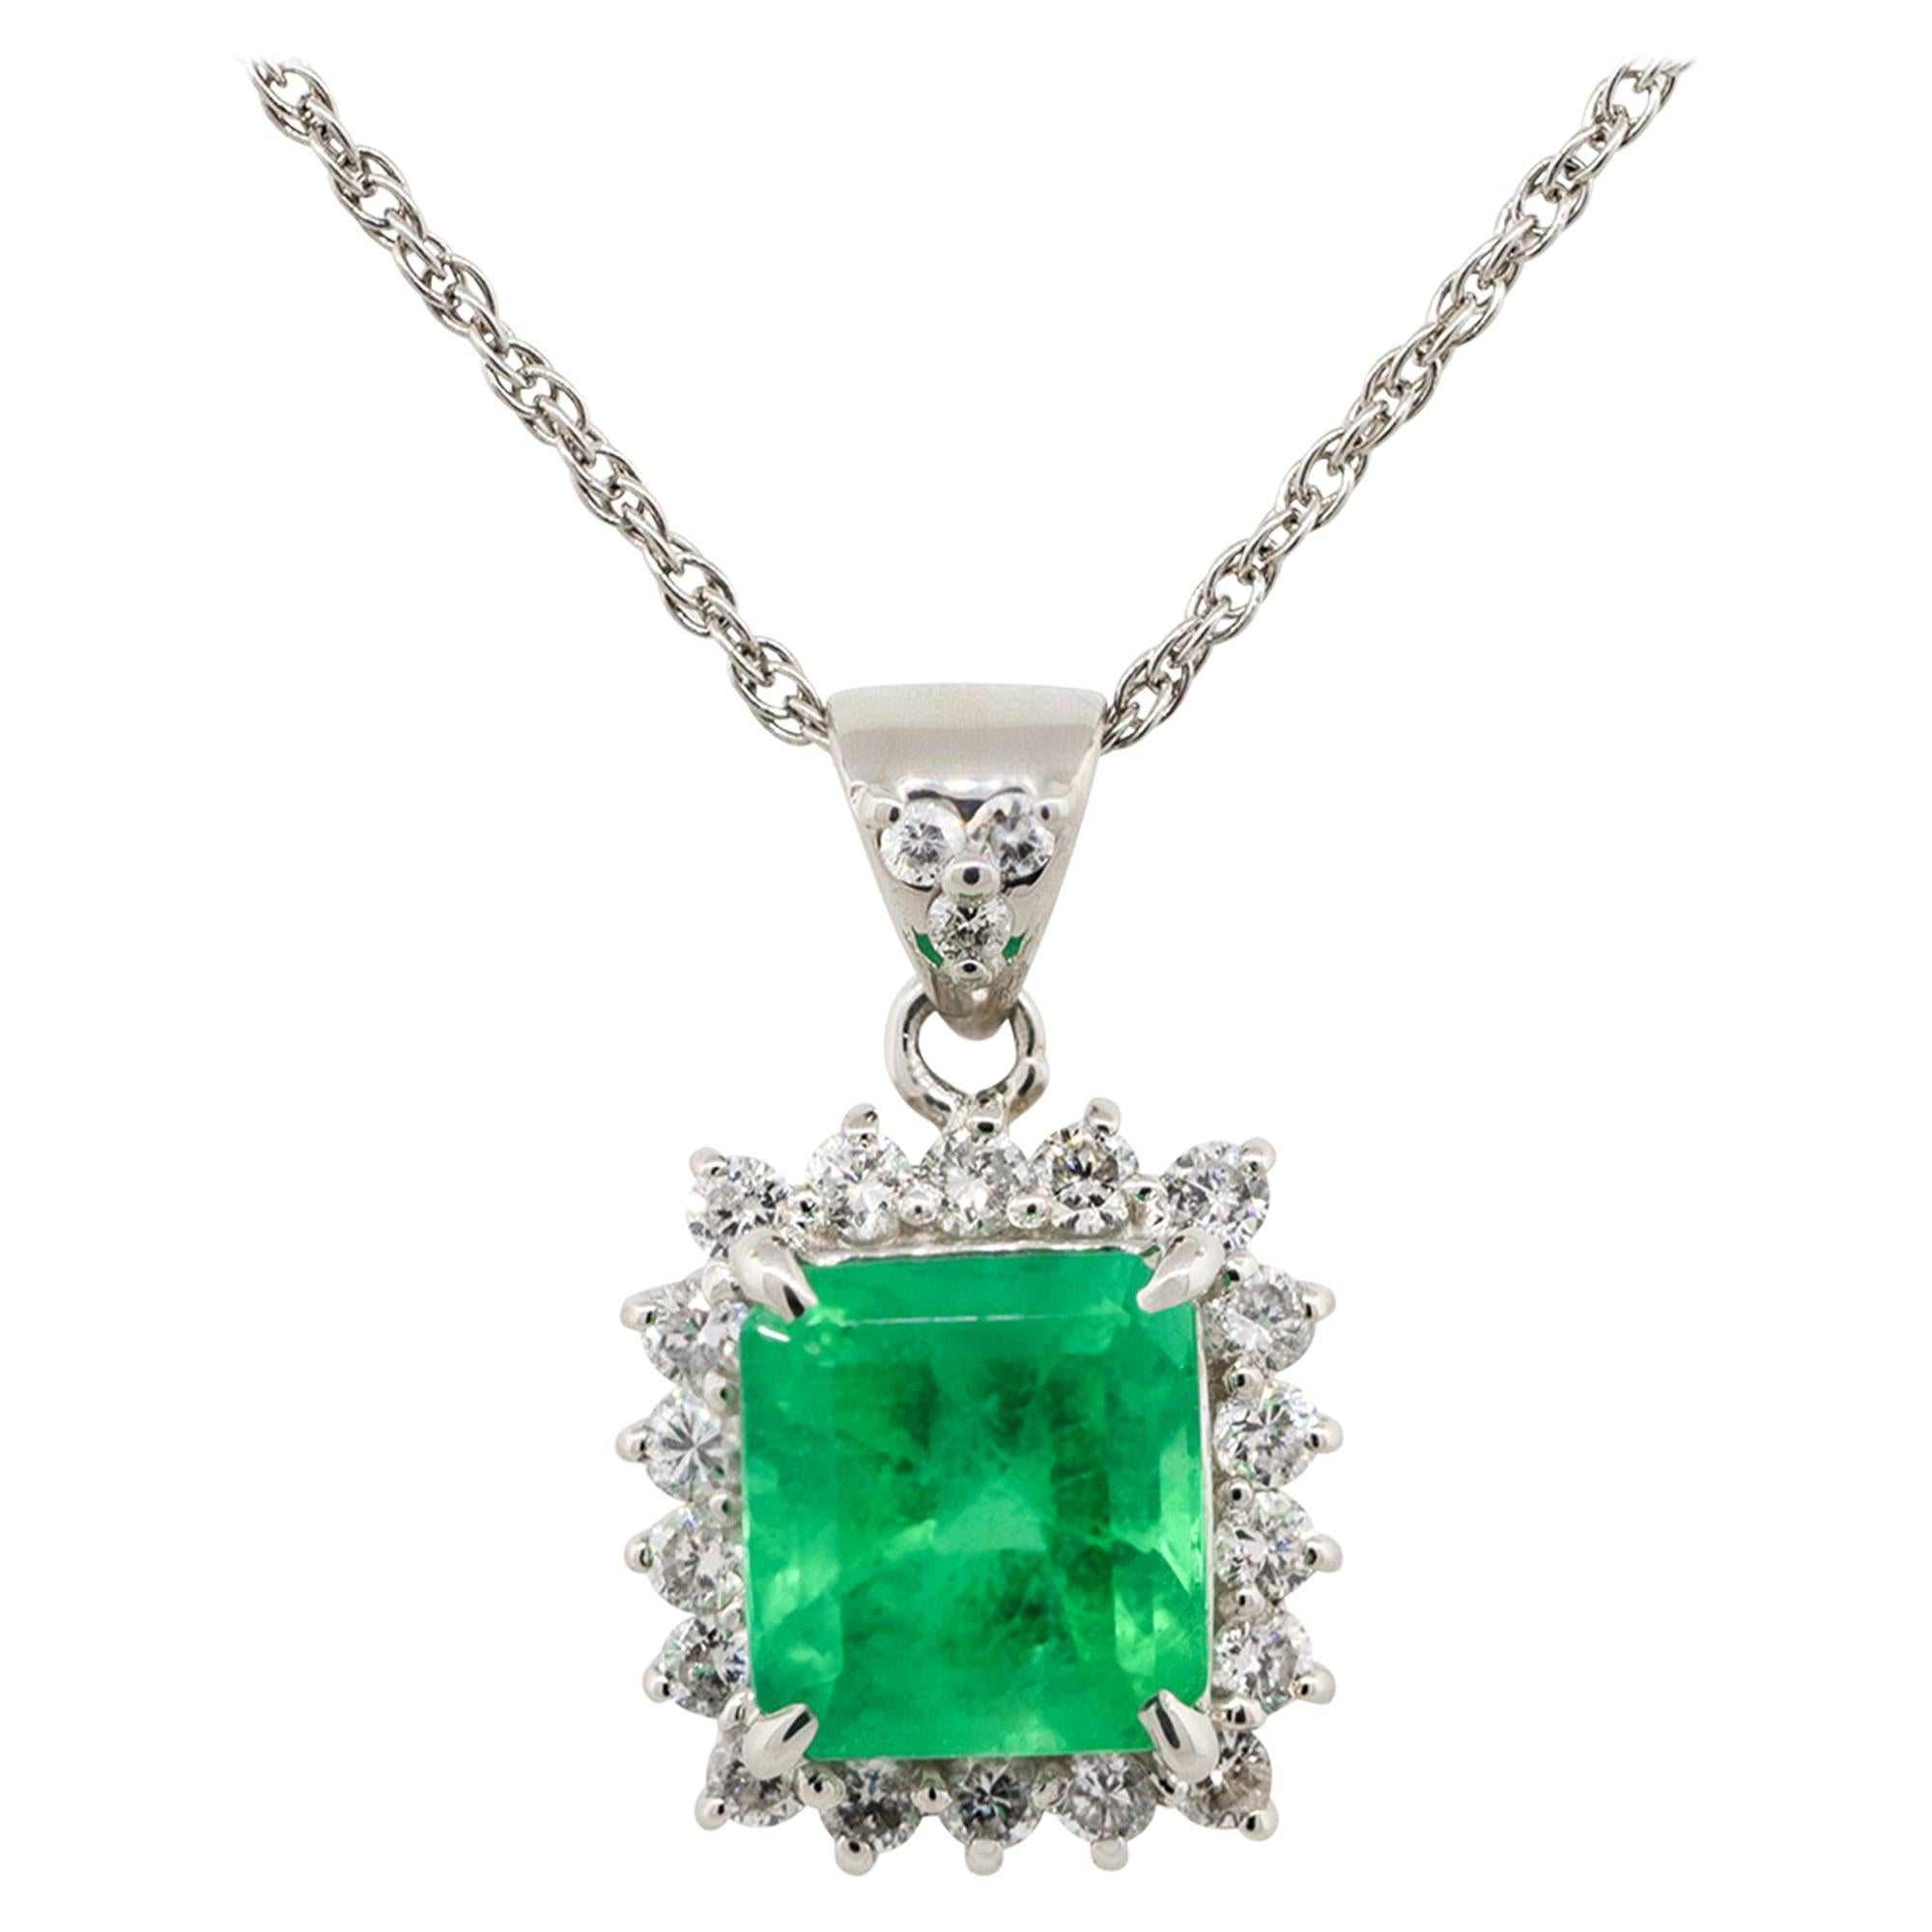 2.07 Carat Emerald with Diamond Halo Pendant Necklace Platinum in Stock